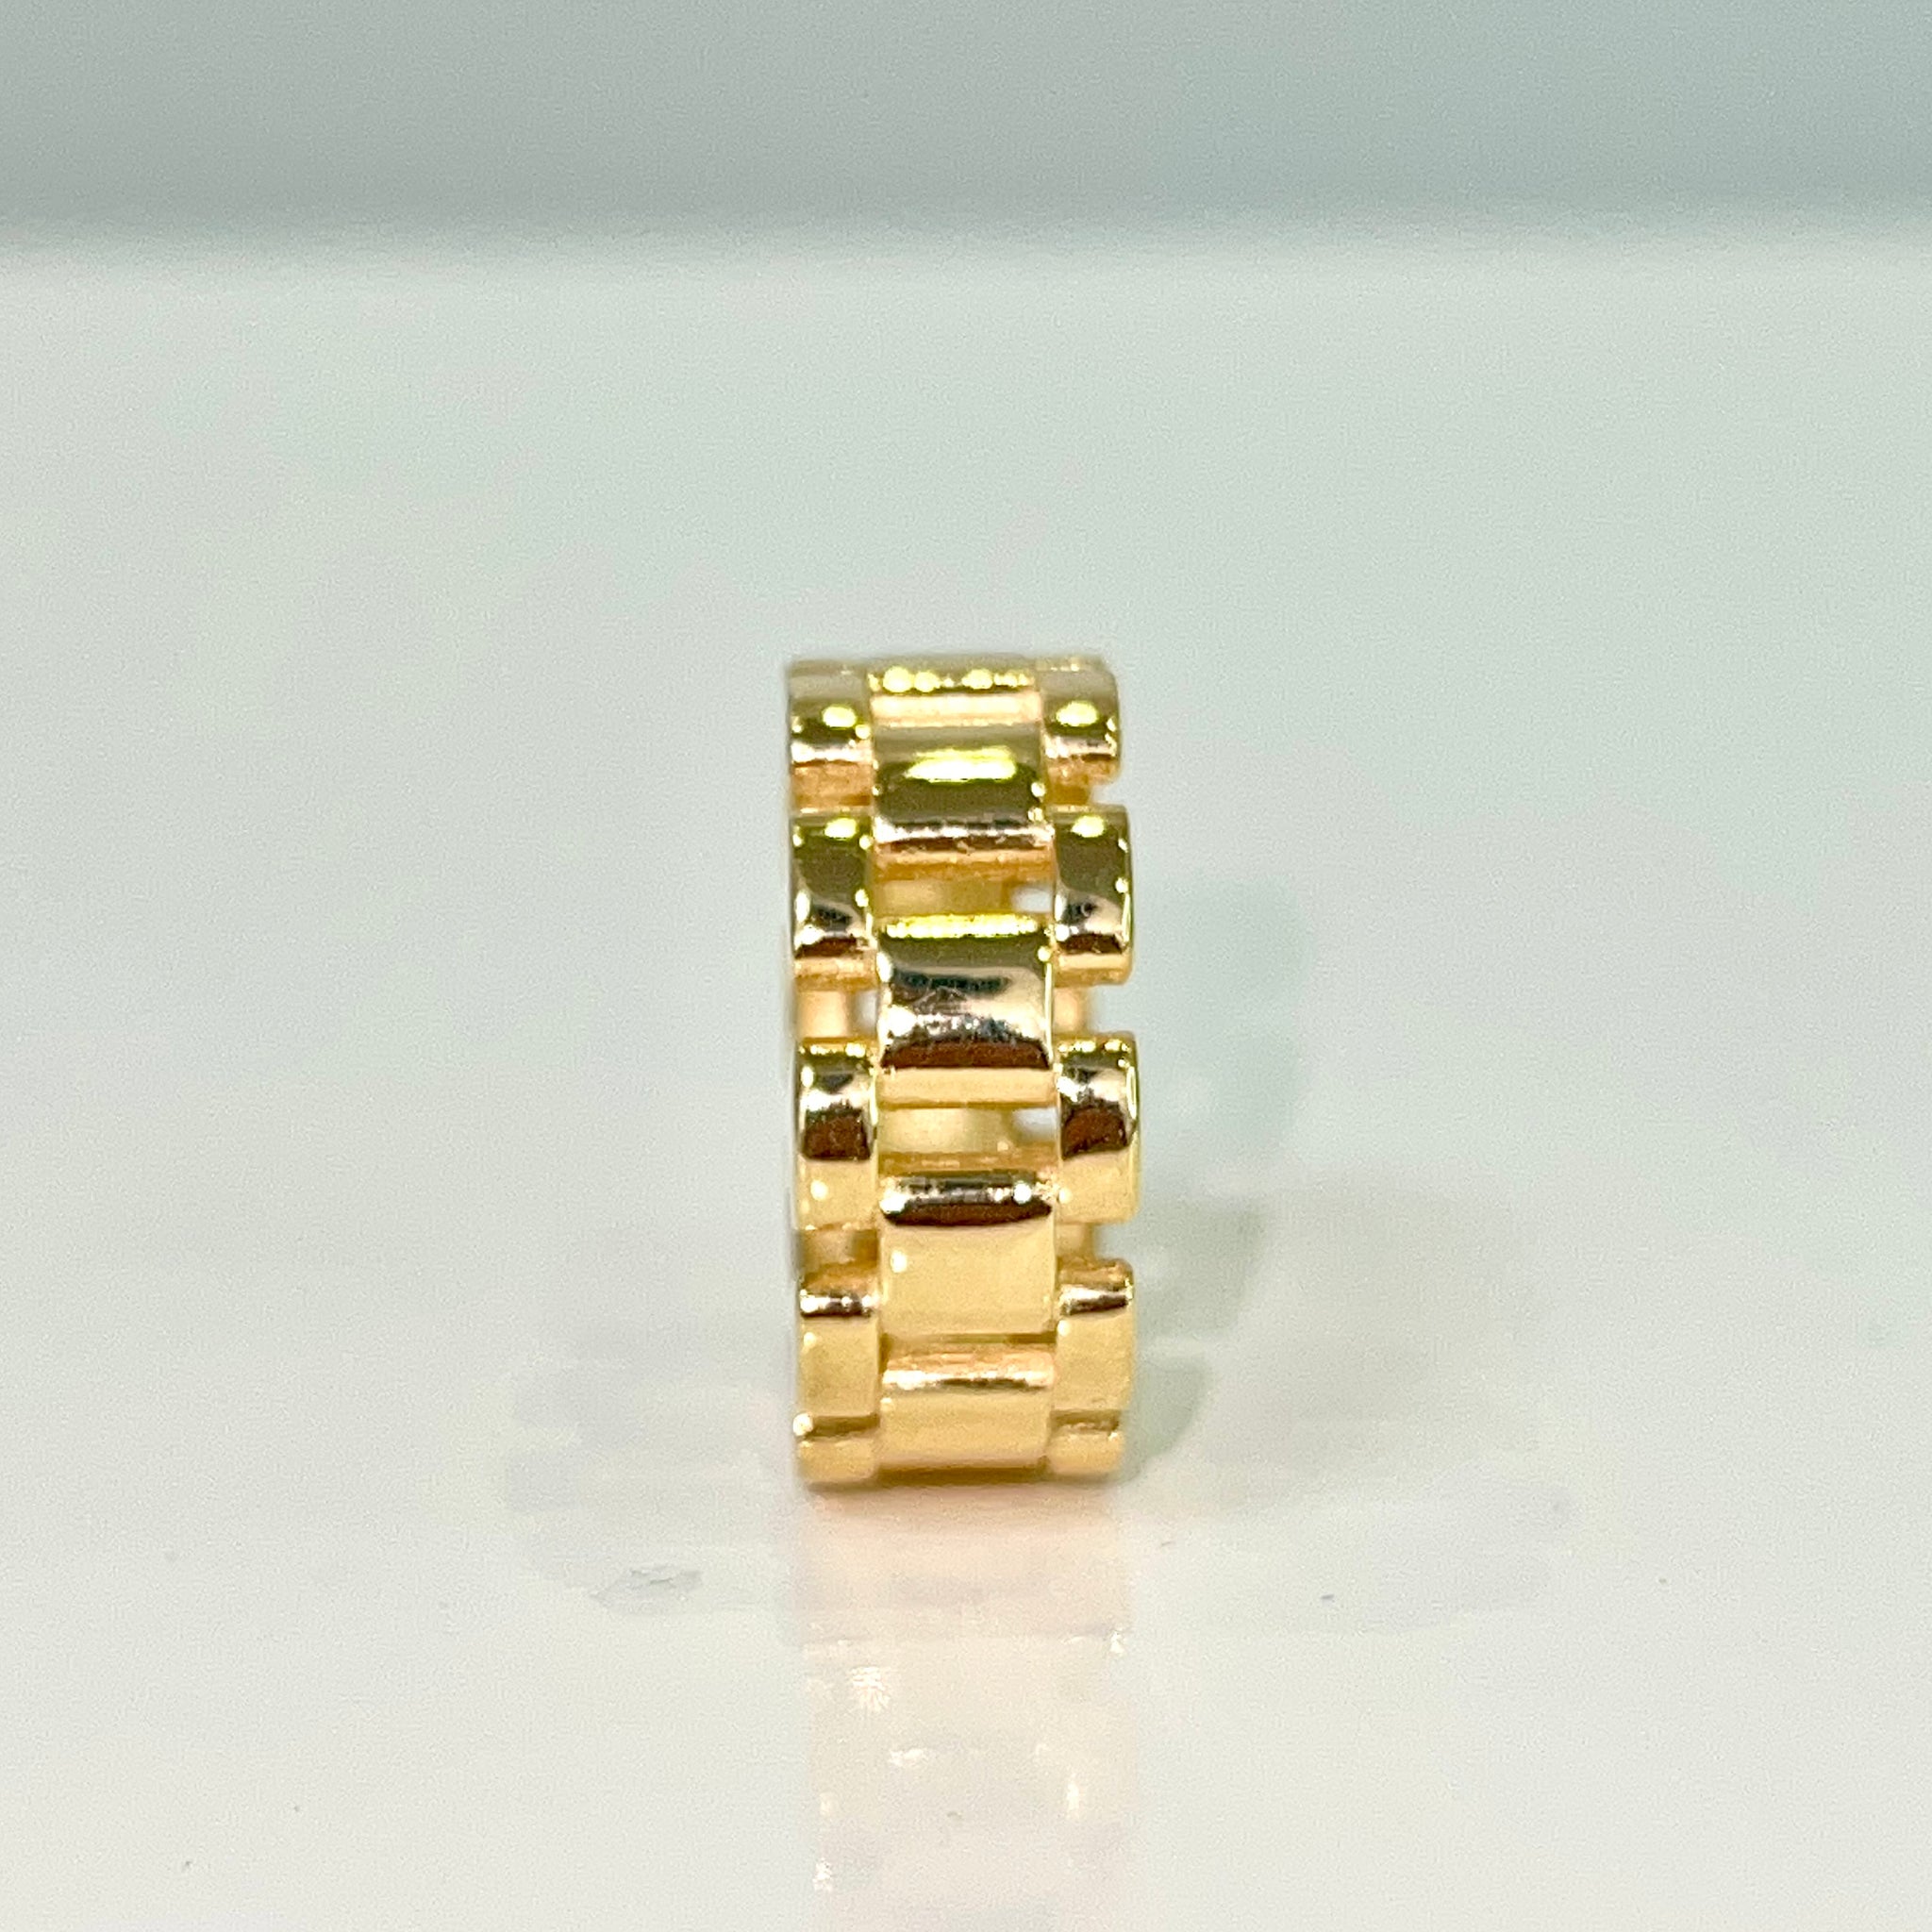 Presidential Link Ring - 14 carat gold